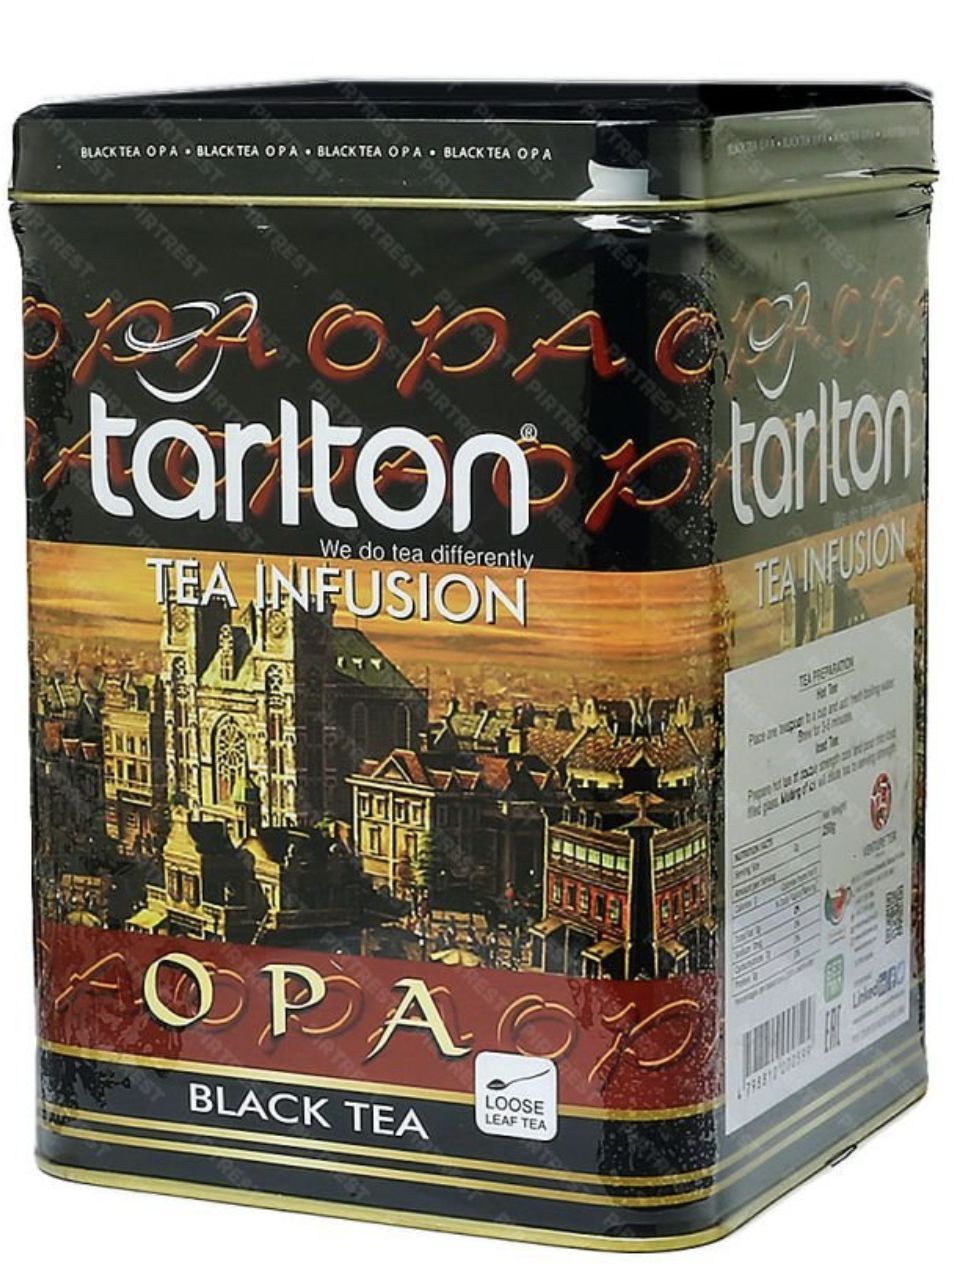 Черный чай opa. Чай Tarlton FBOP. Чай Tarlton черный Opa 100 г. Чай Tarlton Opa черный цейлонский. Чай Tarlton Premium quality.